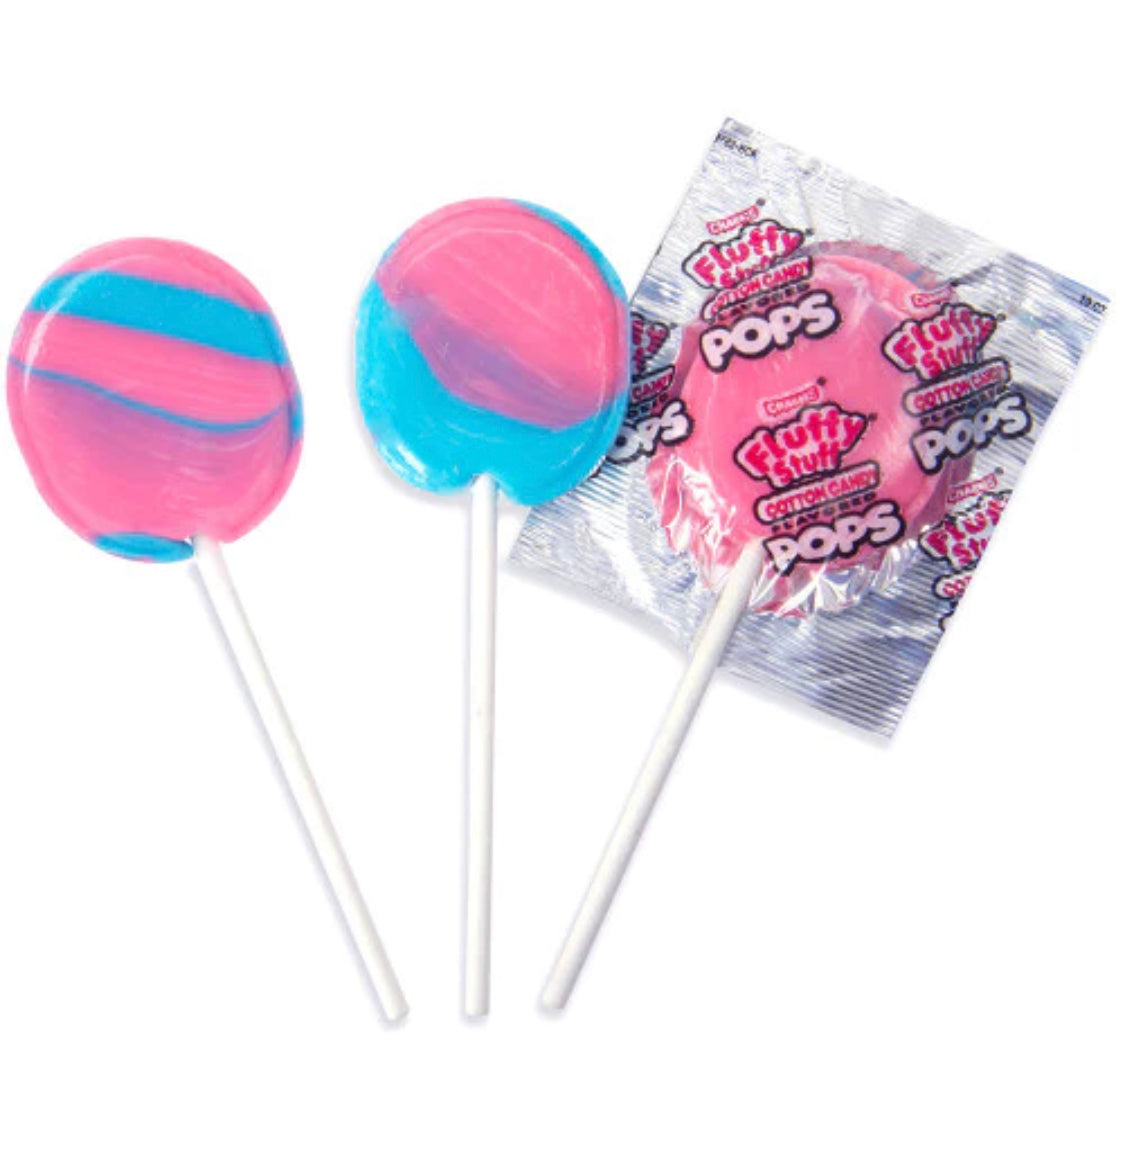 Charms Fluffy Stuff Cotton Candy Lollipop 18 g